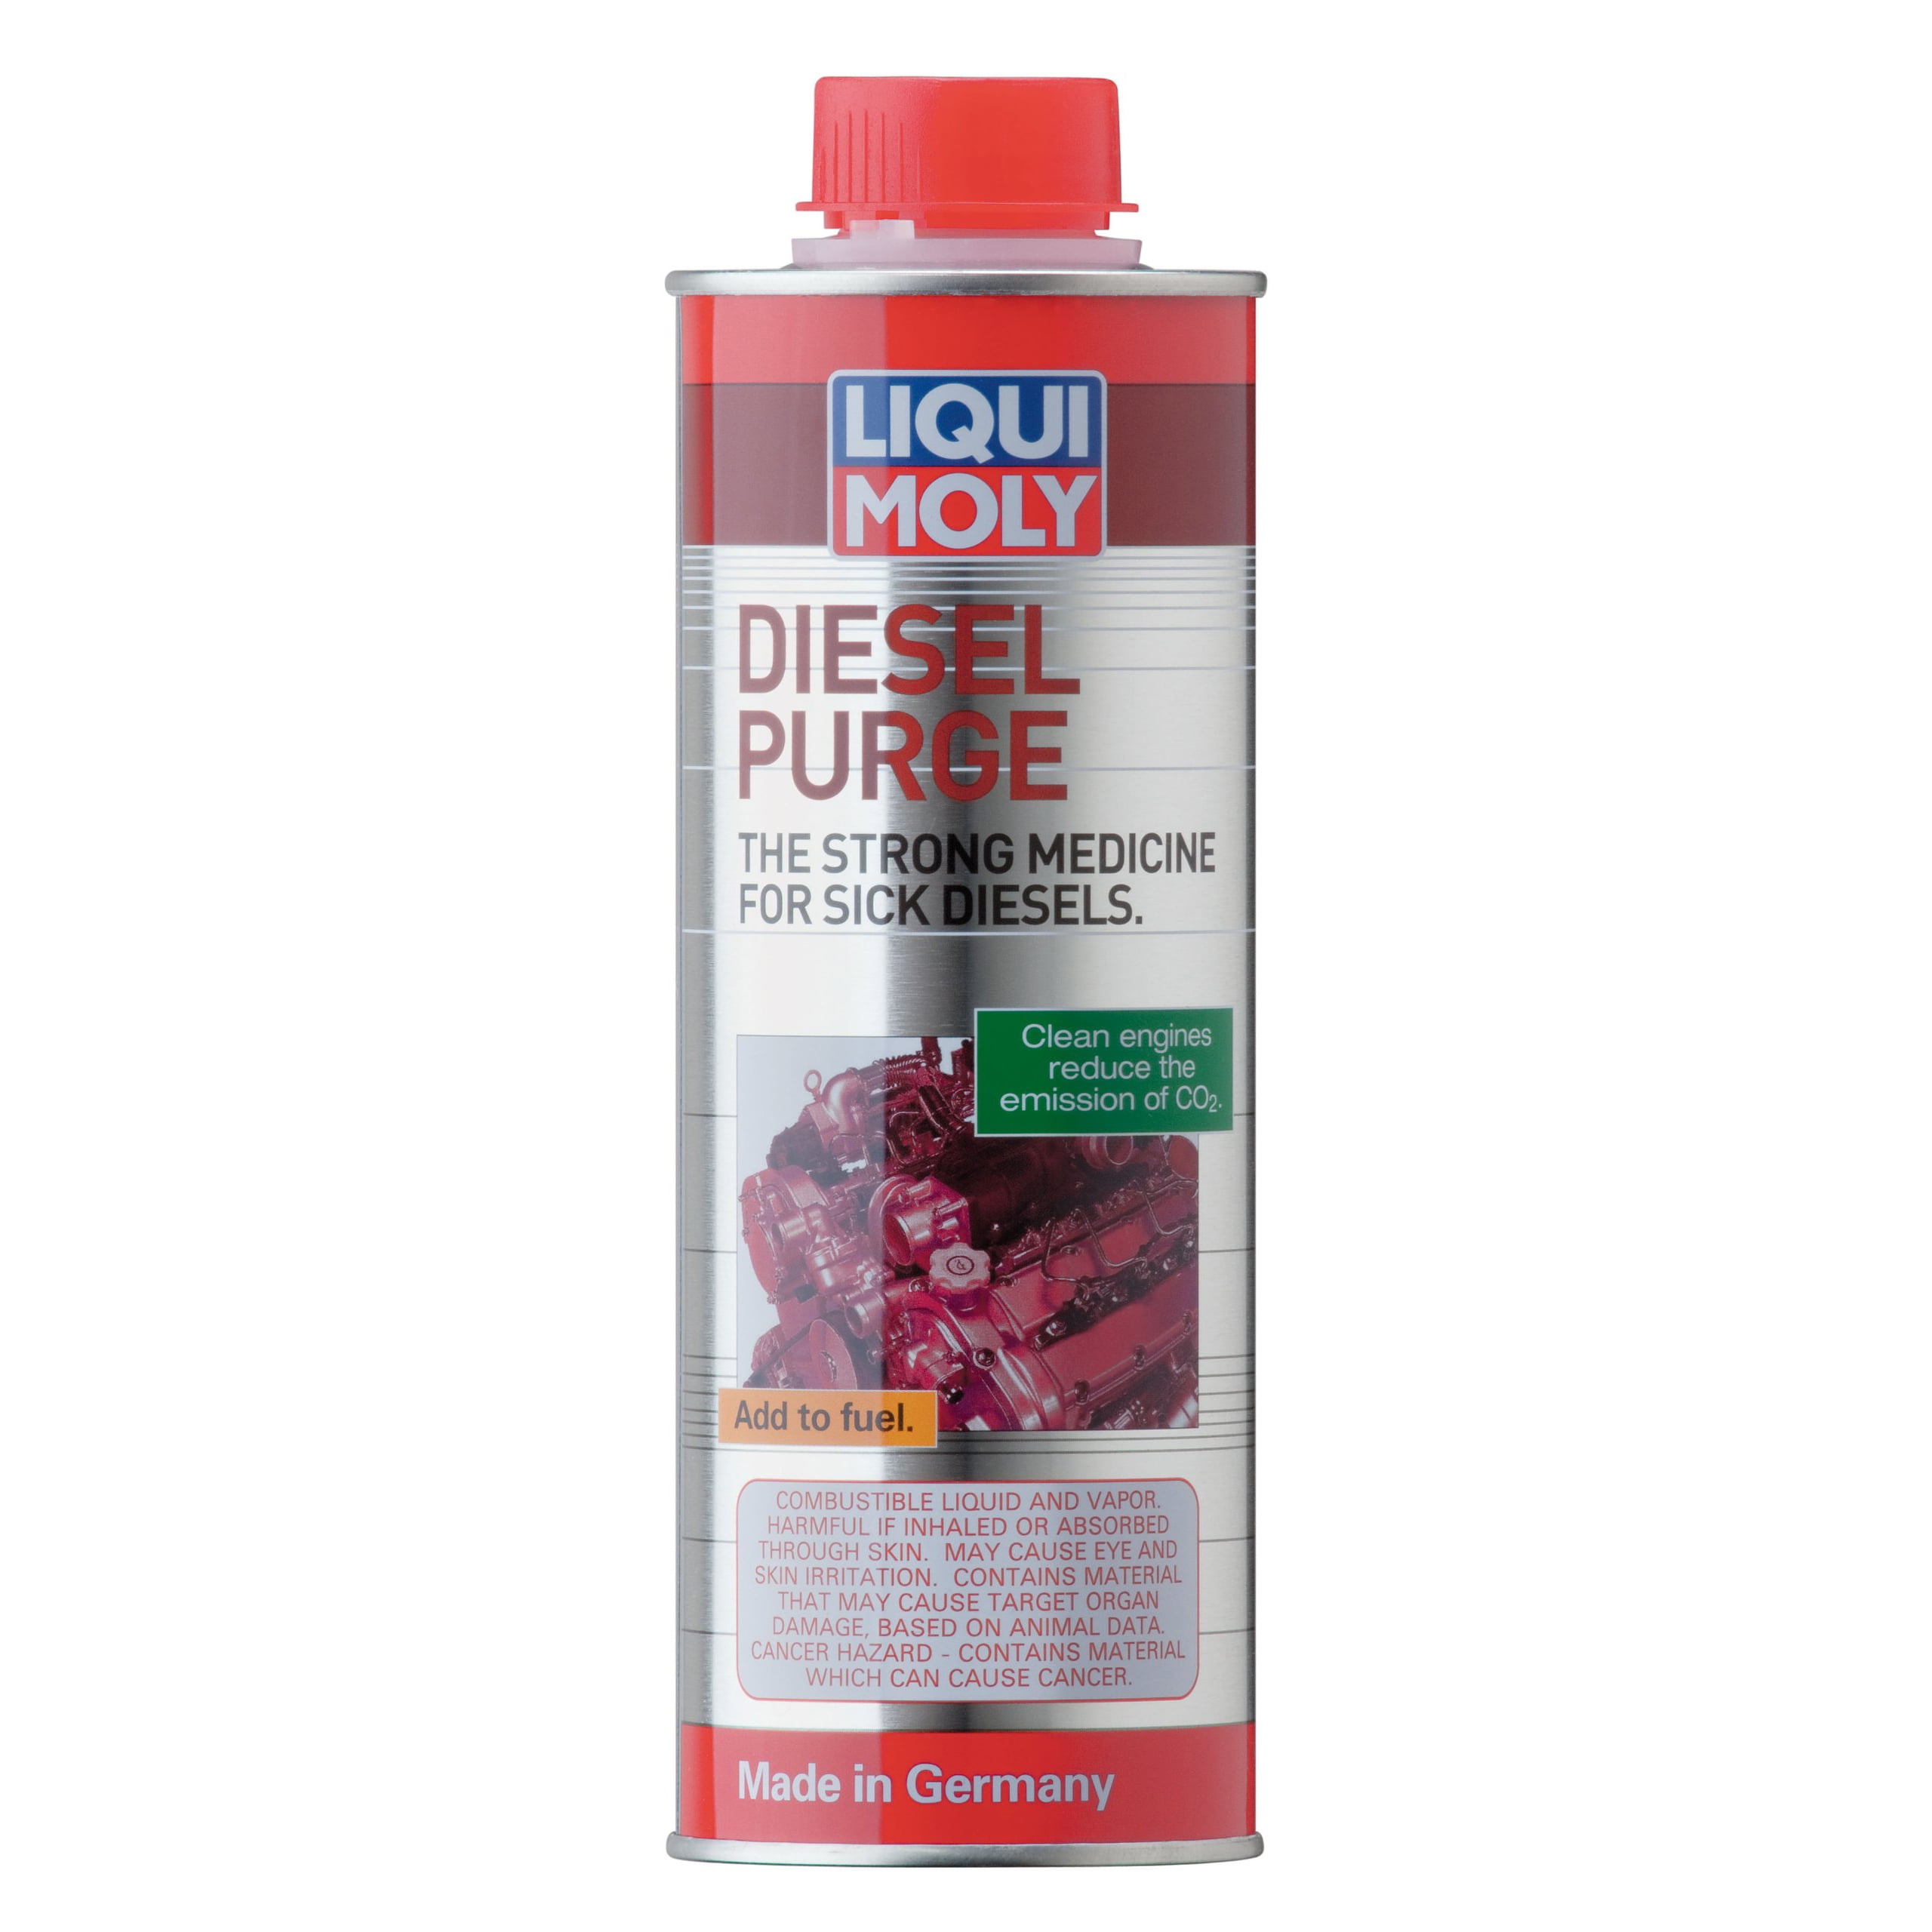 LIQUI MOLY 500mL Diesel Purge